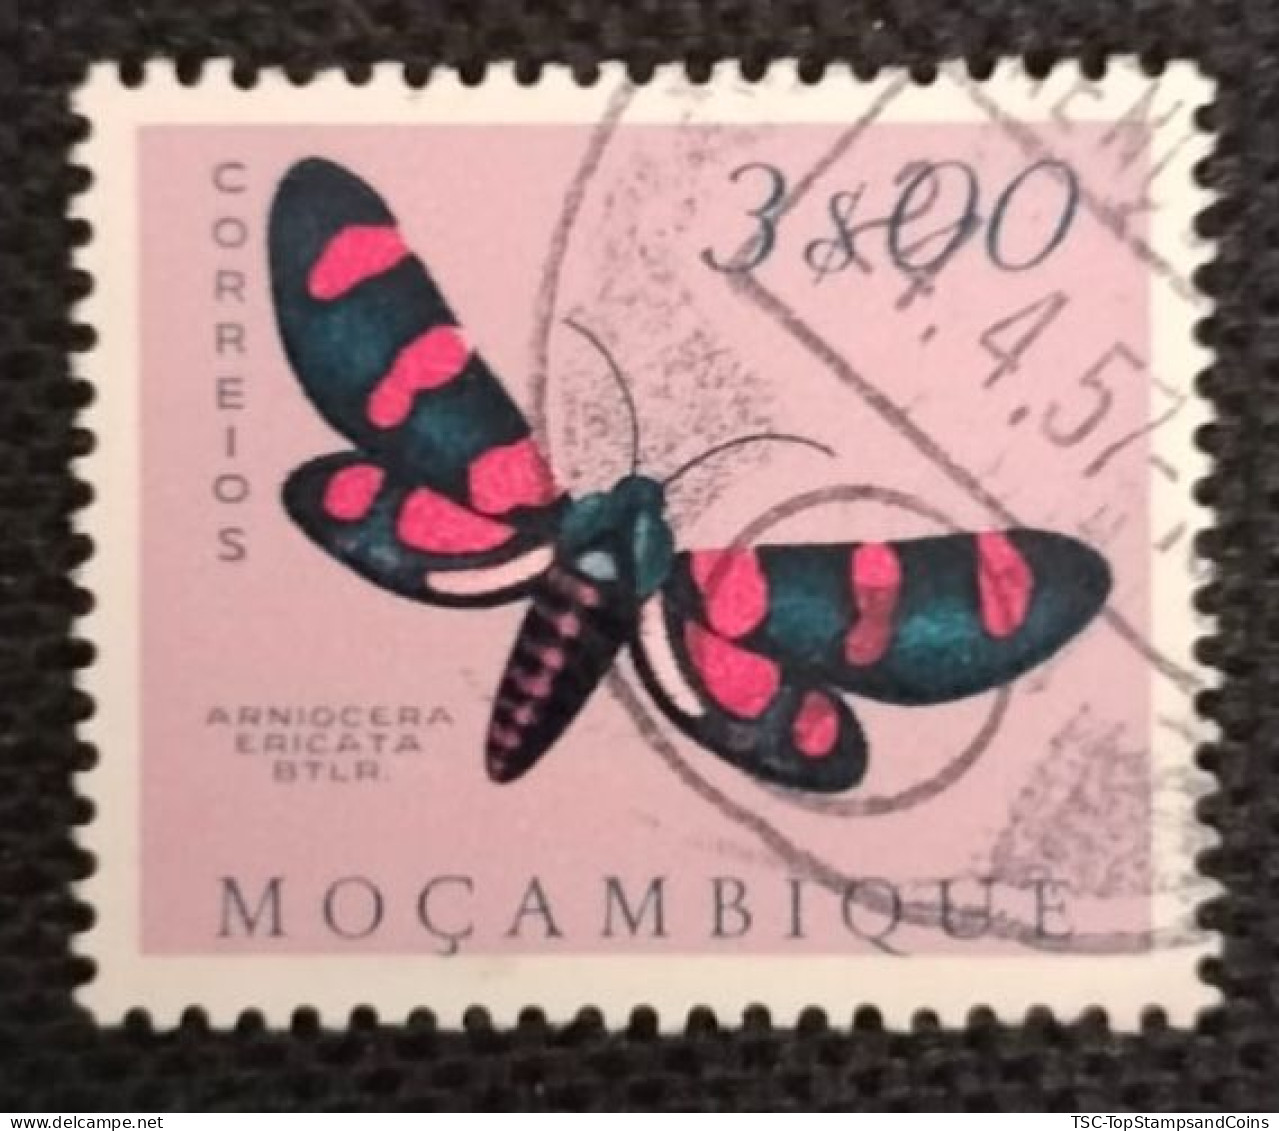 MOZPO0400U5 - Mozambique Butterflies - 3$00 Used Stamp - Mozambique - 1953 - Mozambique